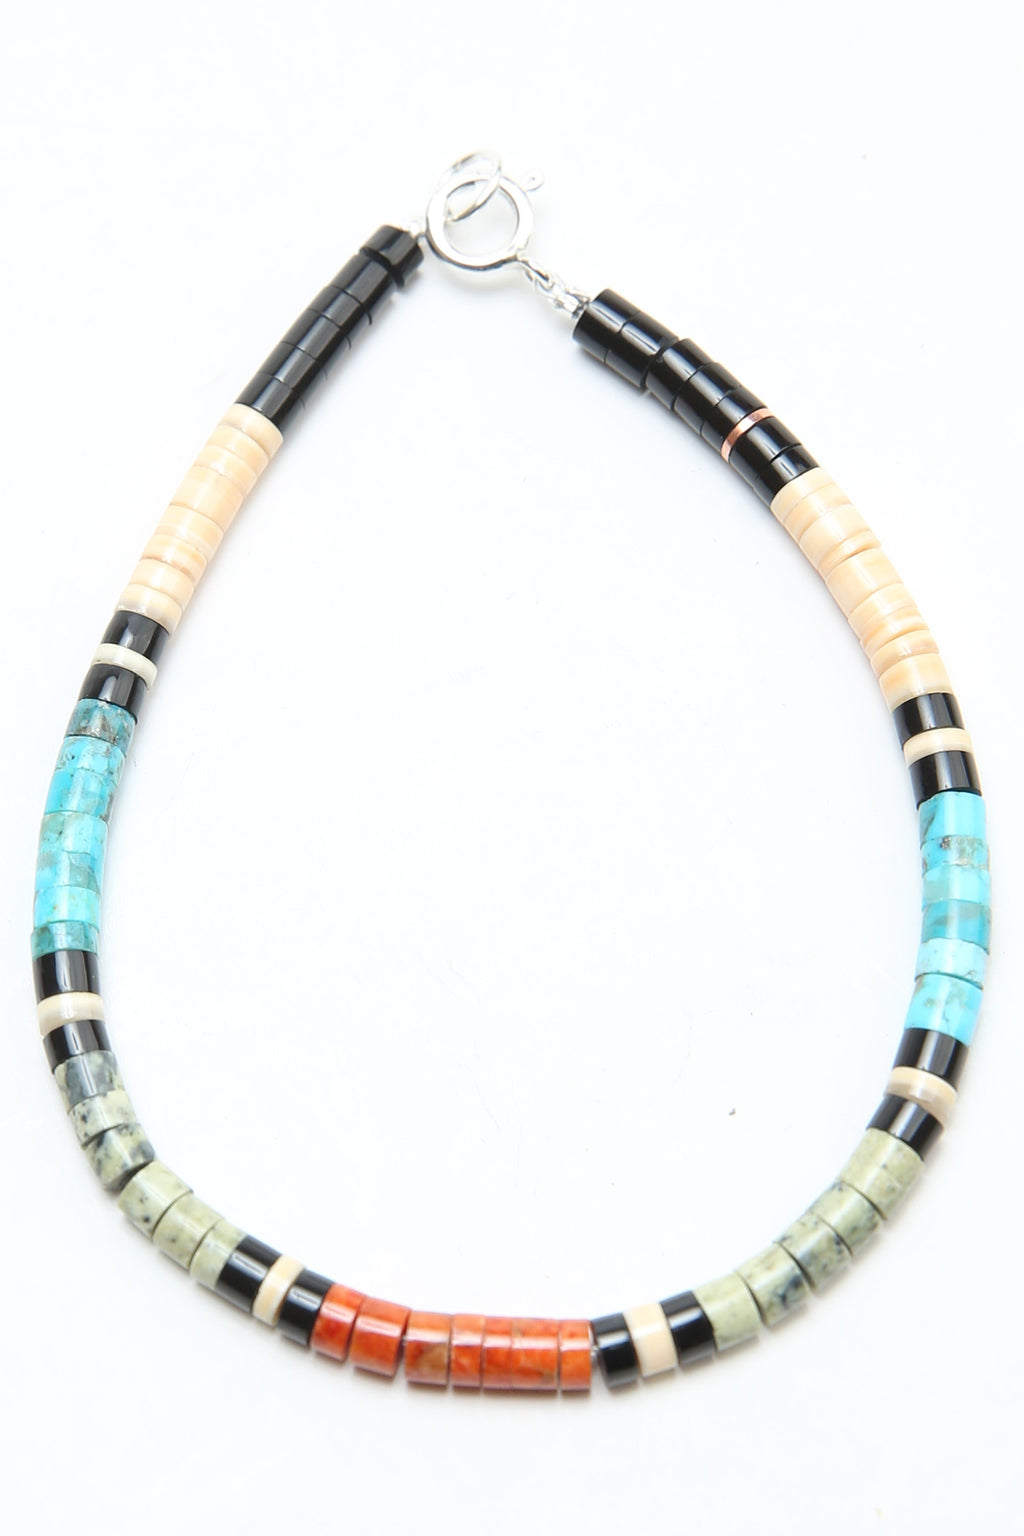 Multicolor Heishi Bracelet by Gerard & Mary Calabaza - Yellow & Black Leopard Skin Serpentine - Socorro, NM